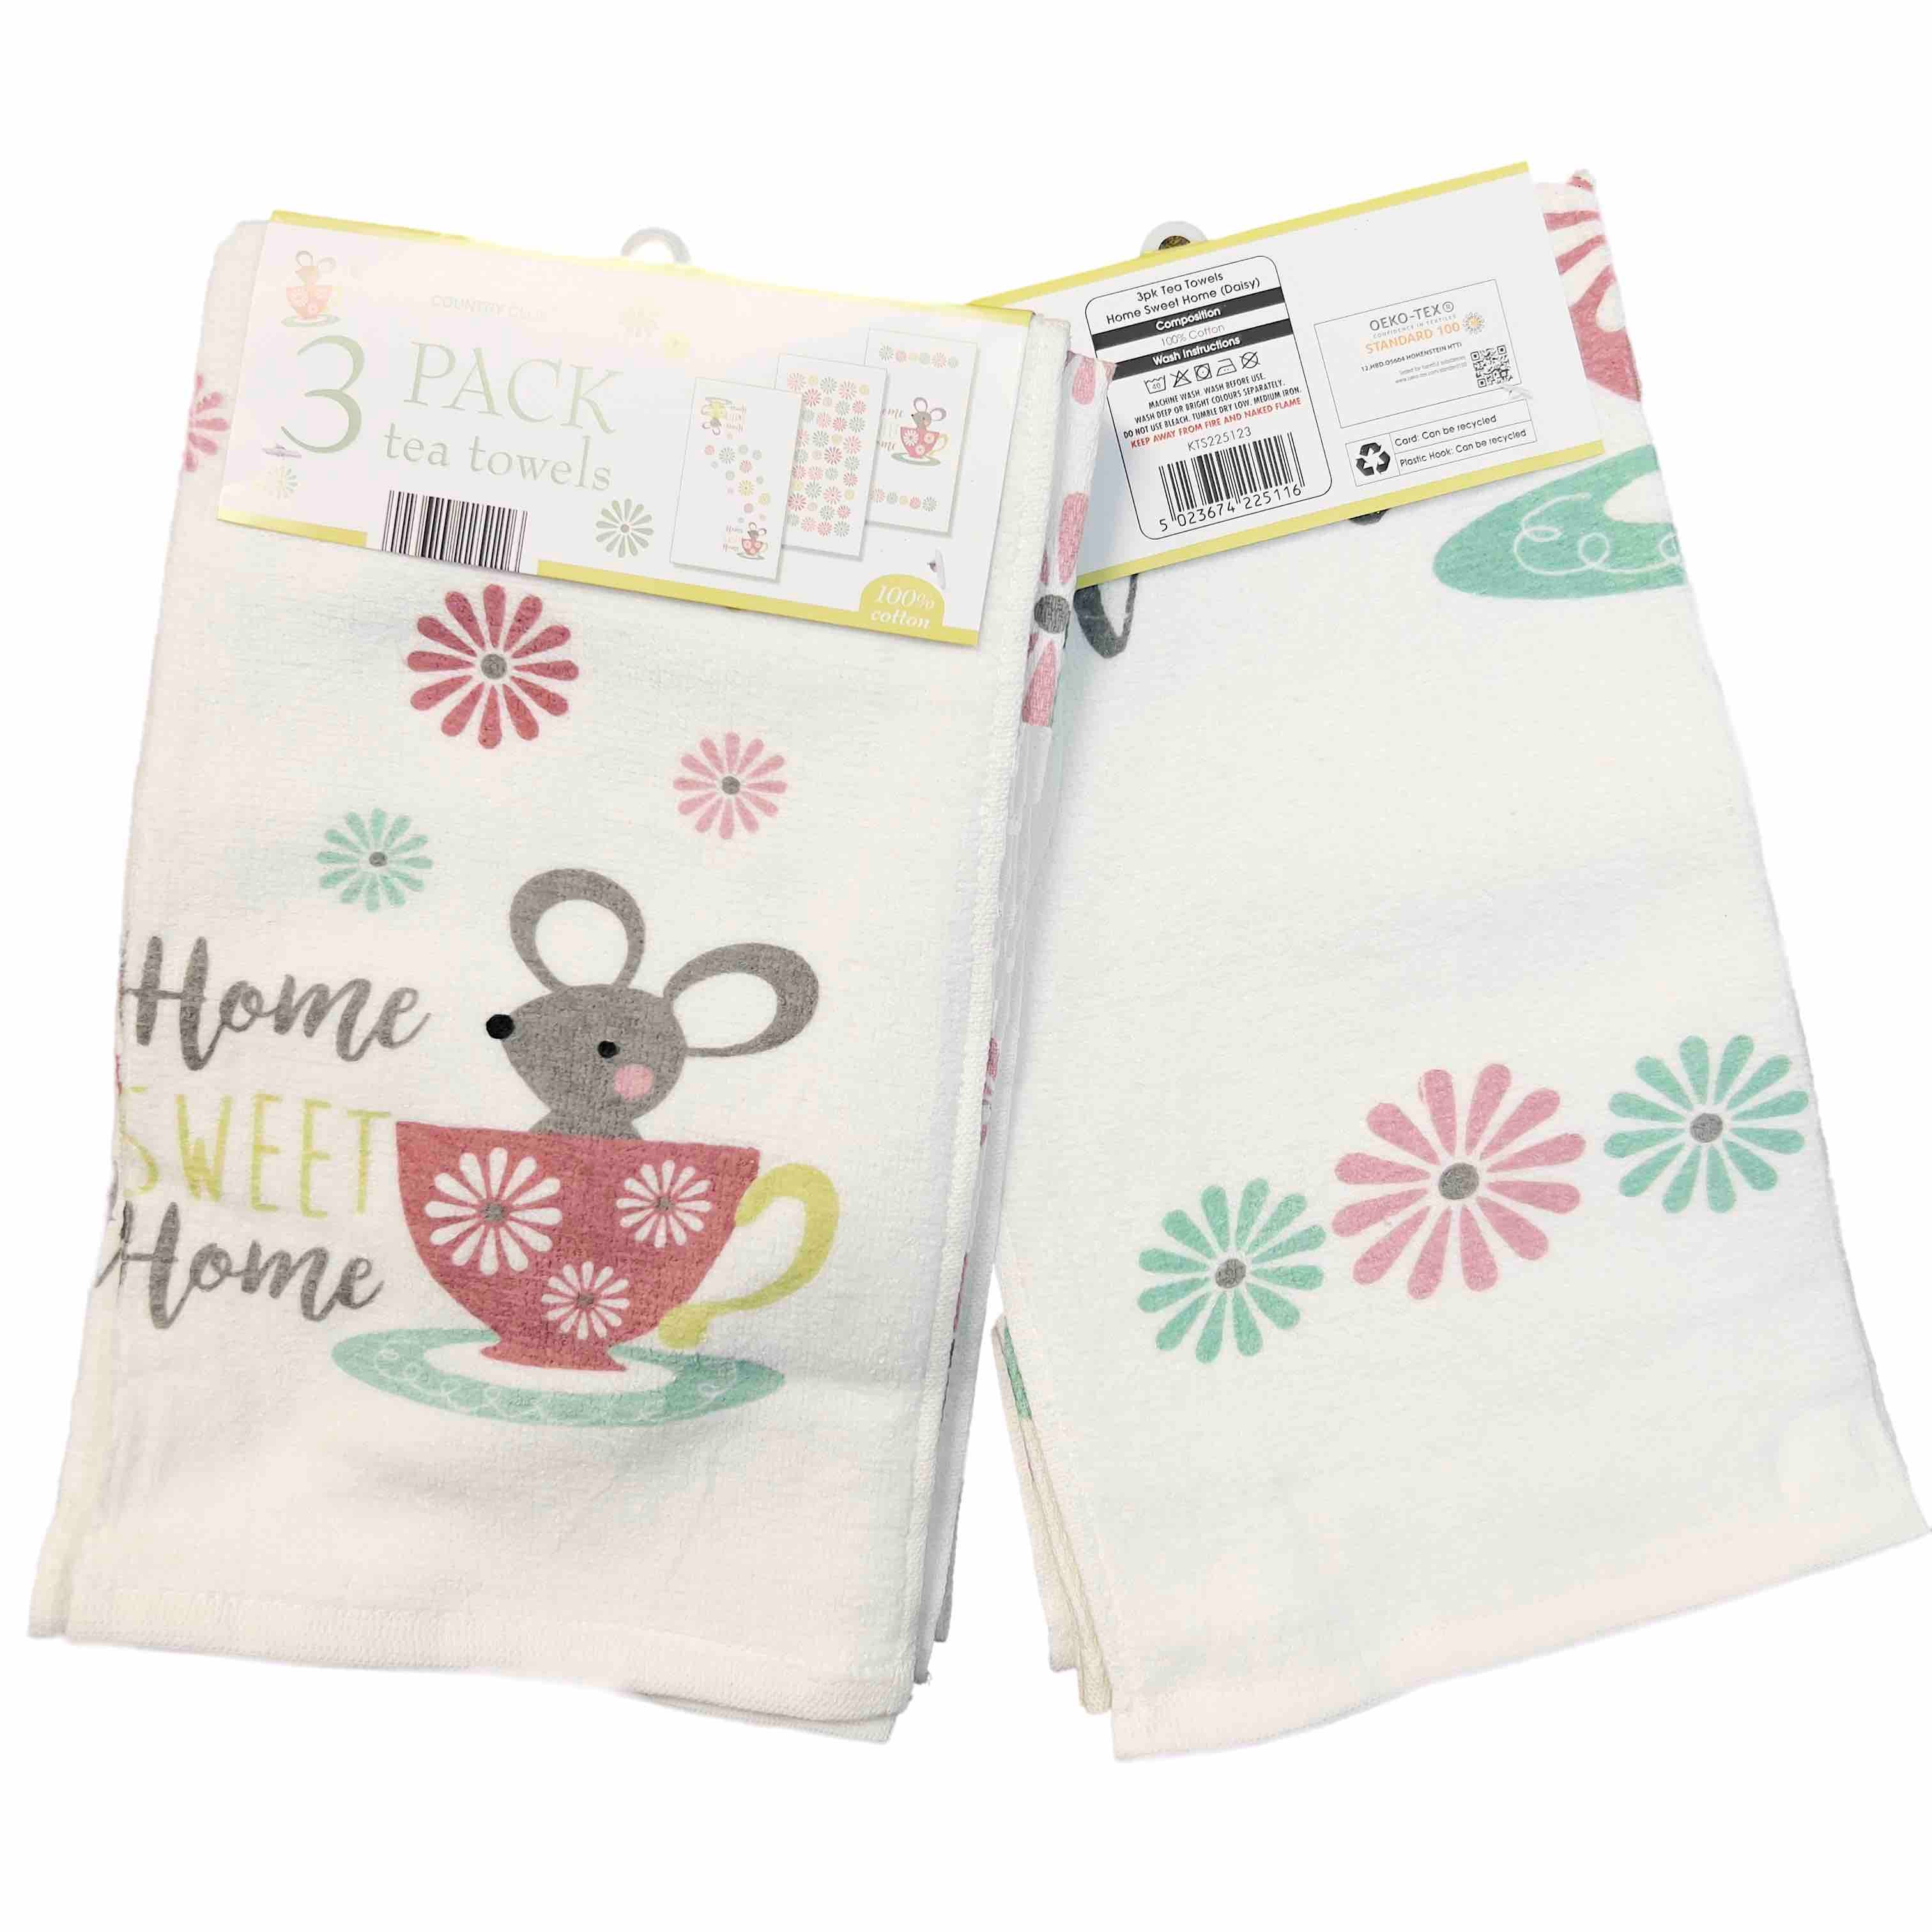 Home Sweet Home Daisy Tea Towels (3 Pack)